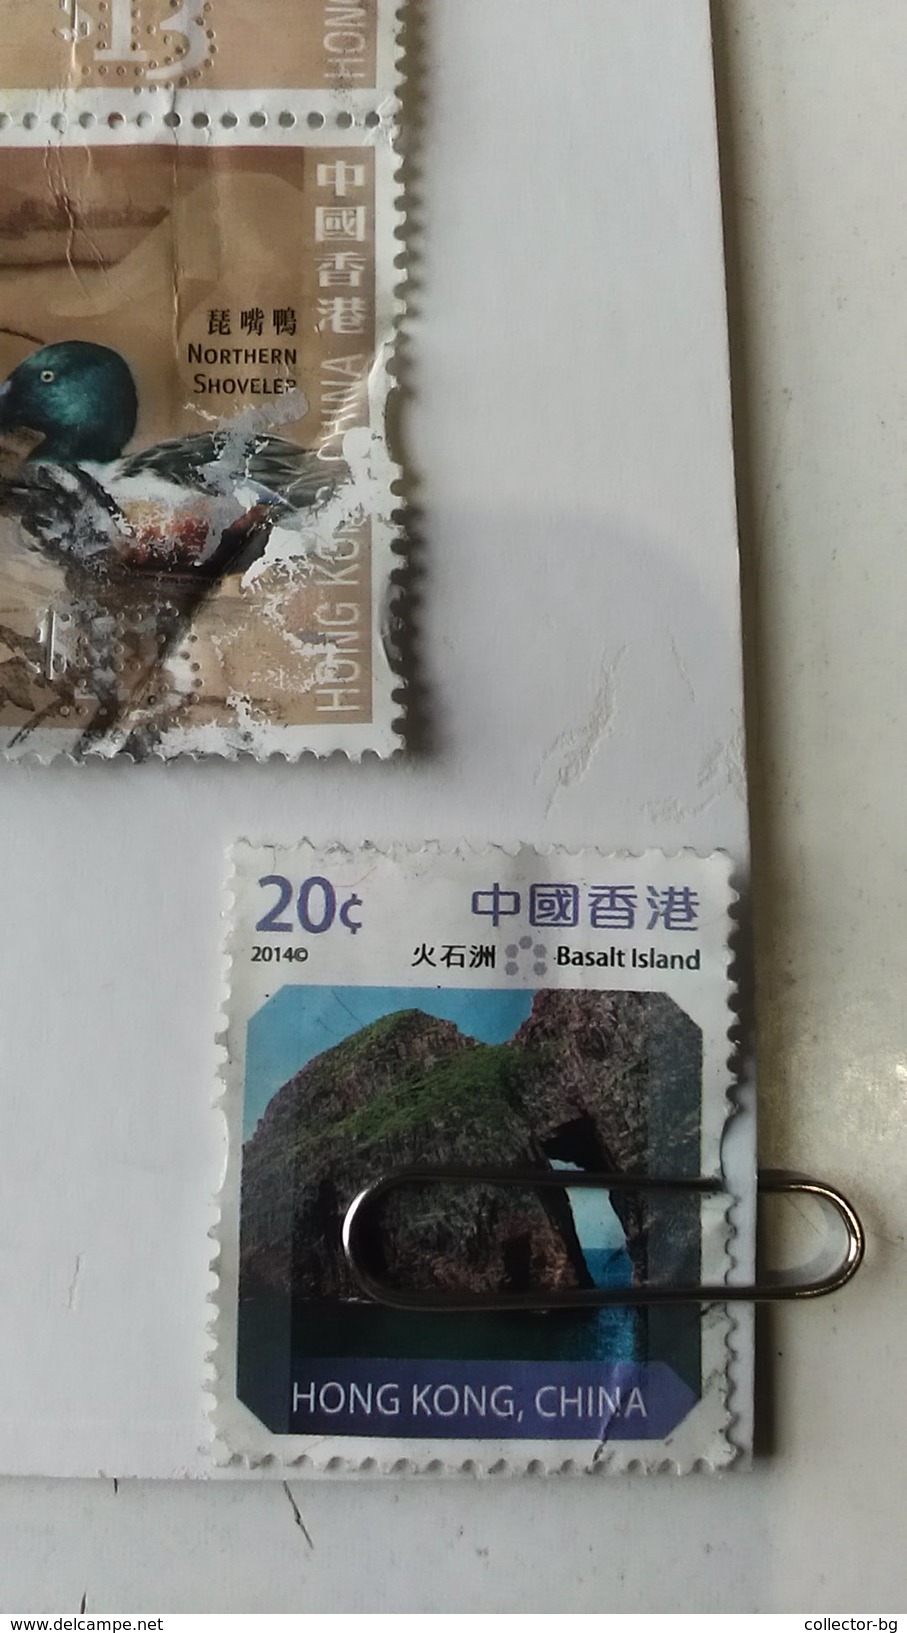 RARE PAIR 50$+13$+20C HONG KONG CHINA 2006-20014 USED TRAVEL BIG PARCEL RRR NORTH SHOVELER BASALT ISLAND STAMP TIMBRE - Used Stamps